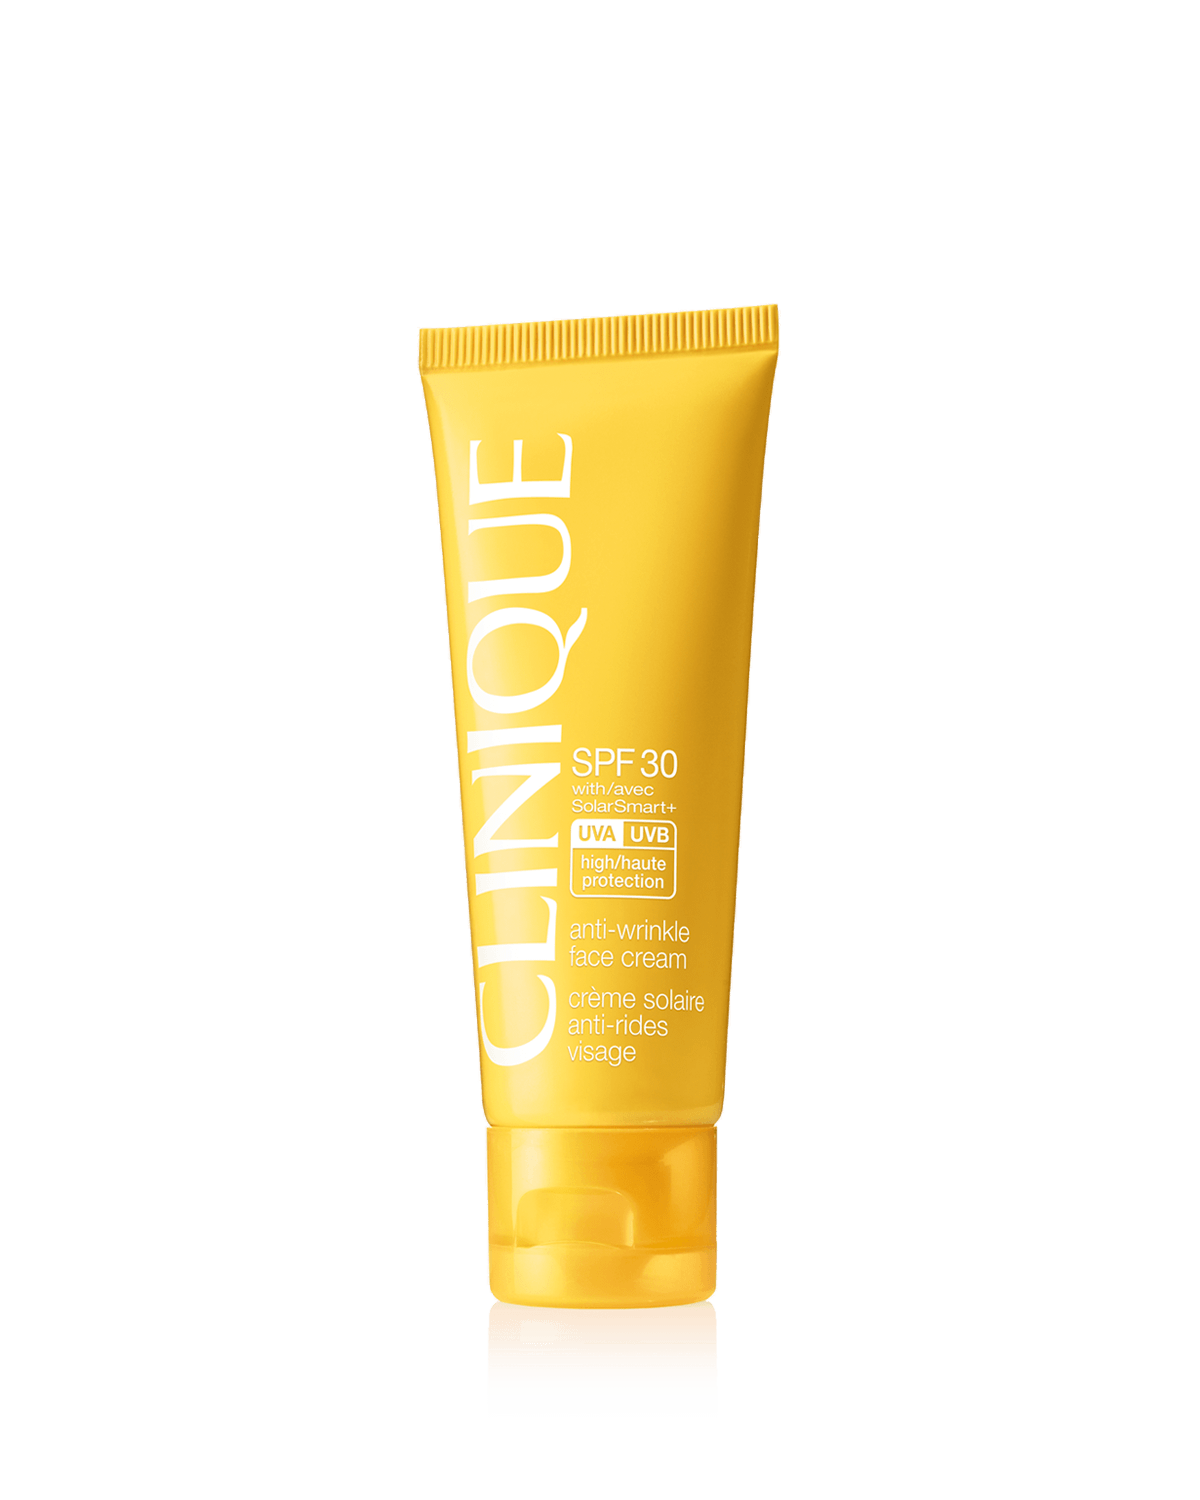 SPF 30 Sunscreen Oil-Free Face Cream 